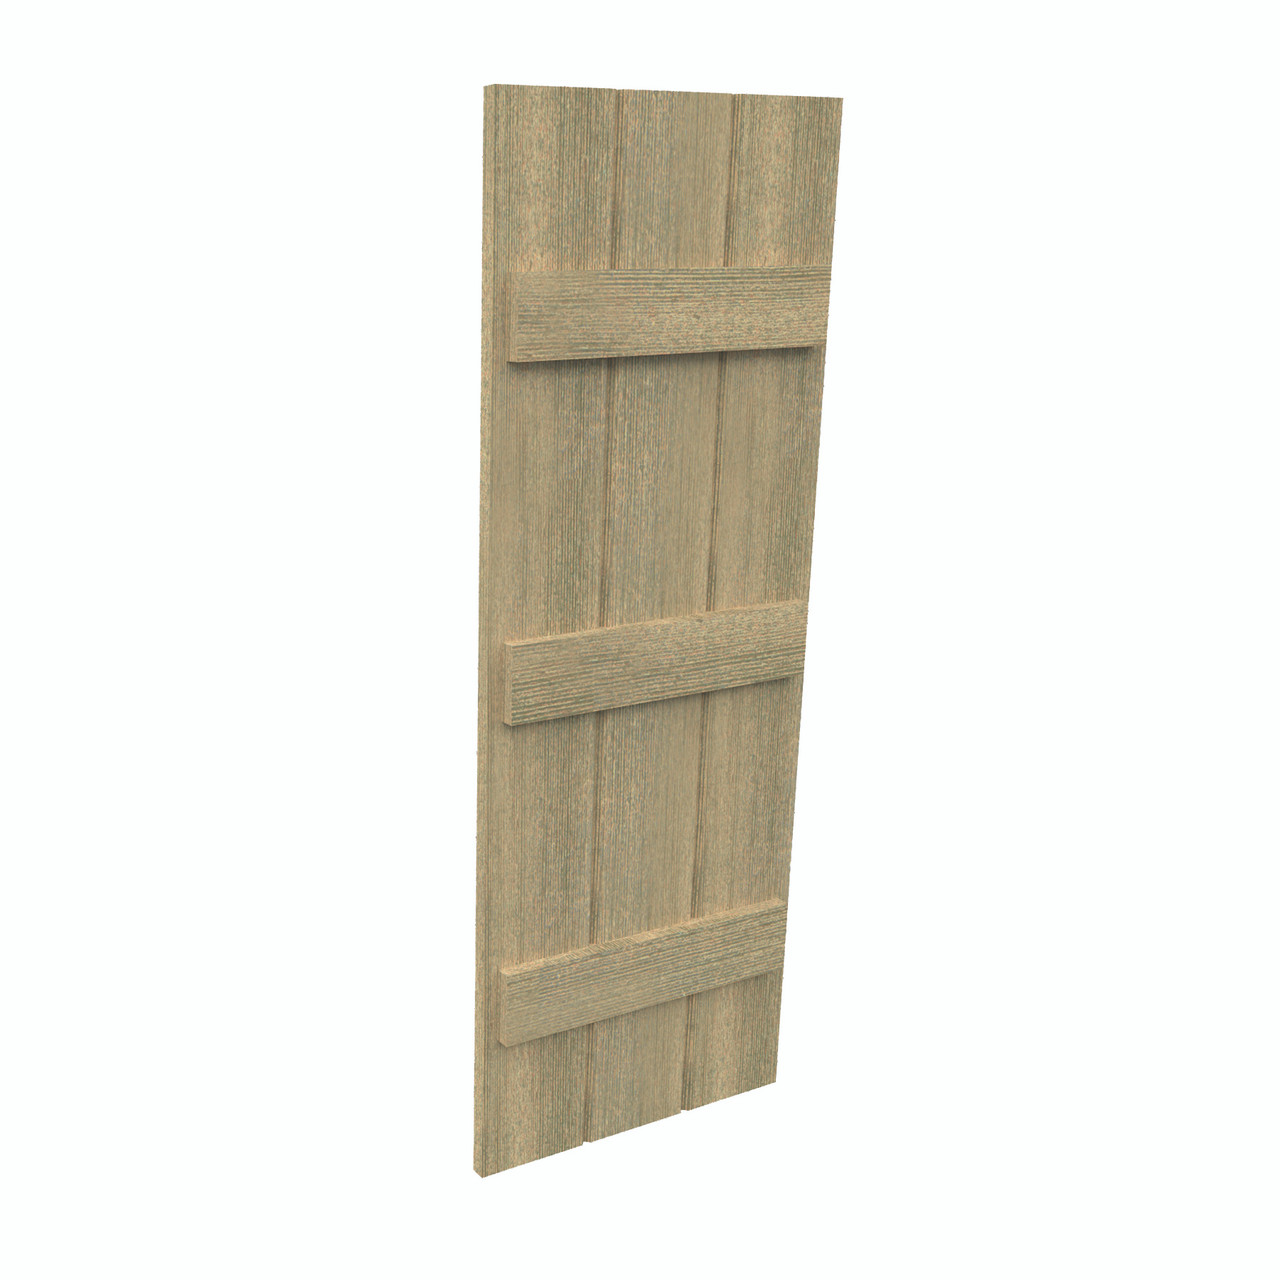 18 inch by 106 inch Plank Shutter with 3-Plank, 3-Batten